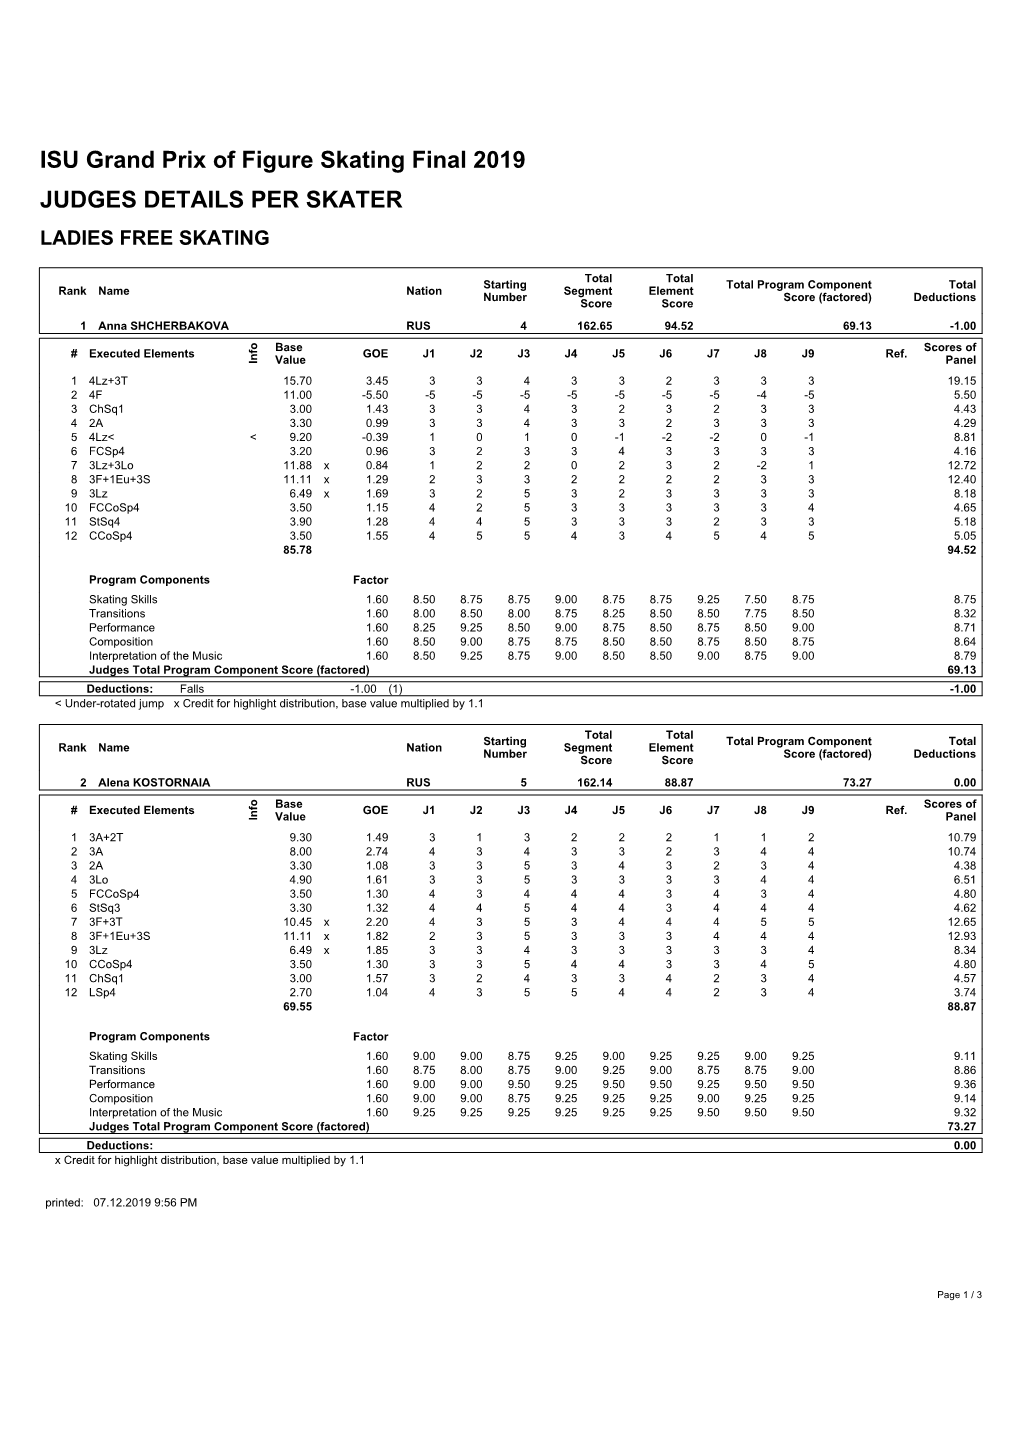 ISU Grand Prix of Figure Skating Final 2019 JUDGES DETAILS PER SKATER LADIES FREE SKATING